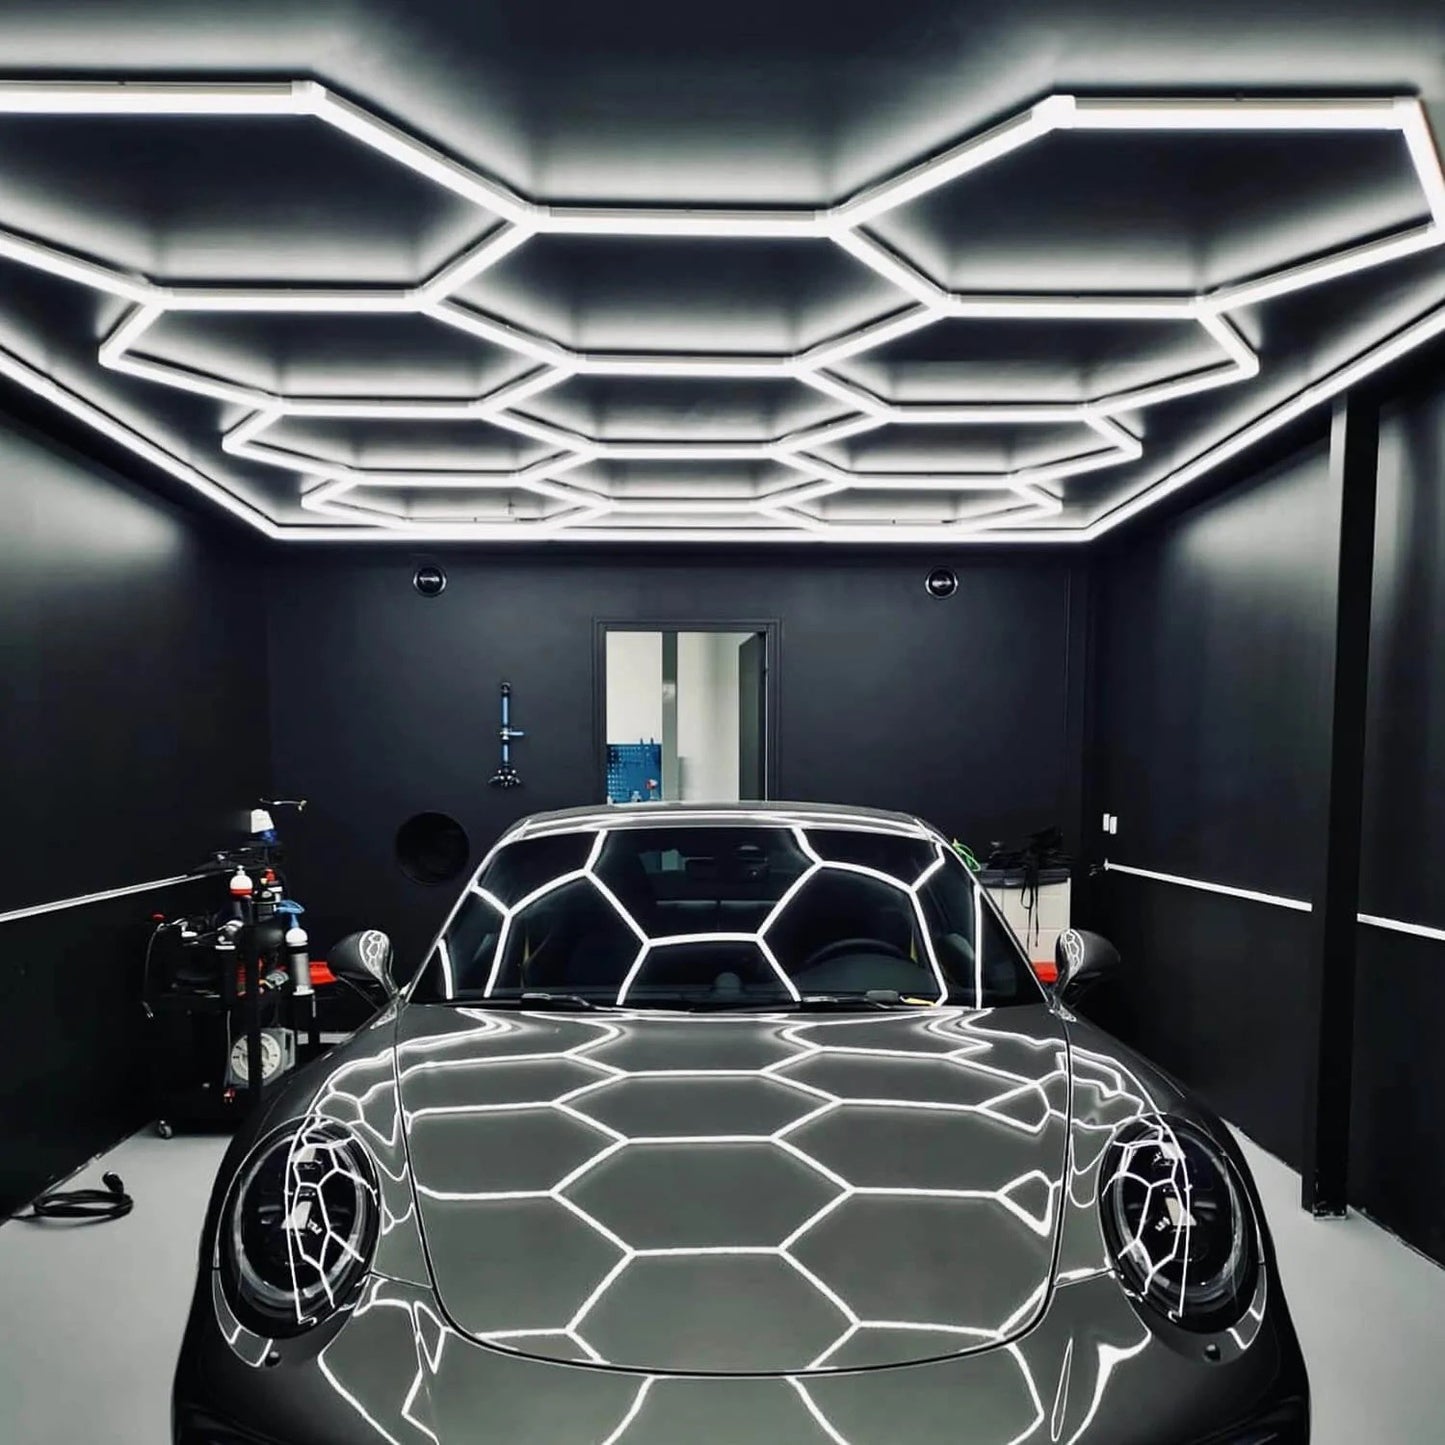 Hexagon lighting in a single car garage